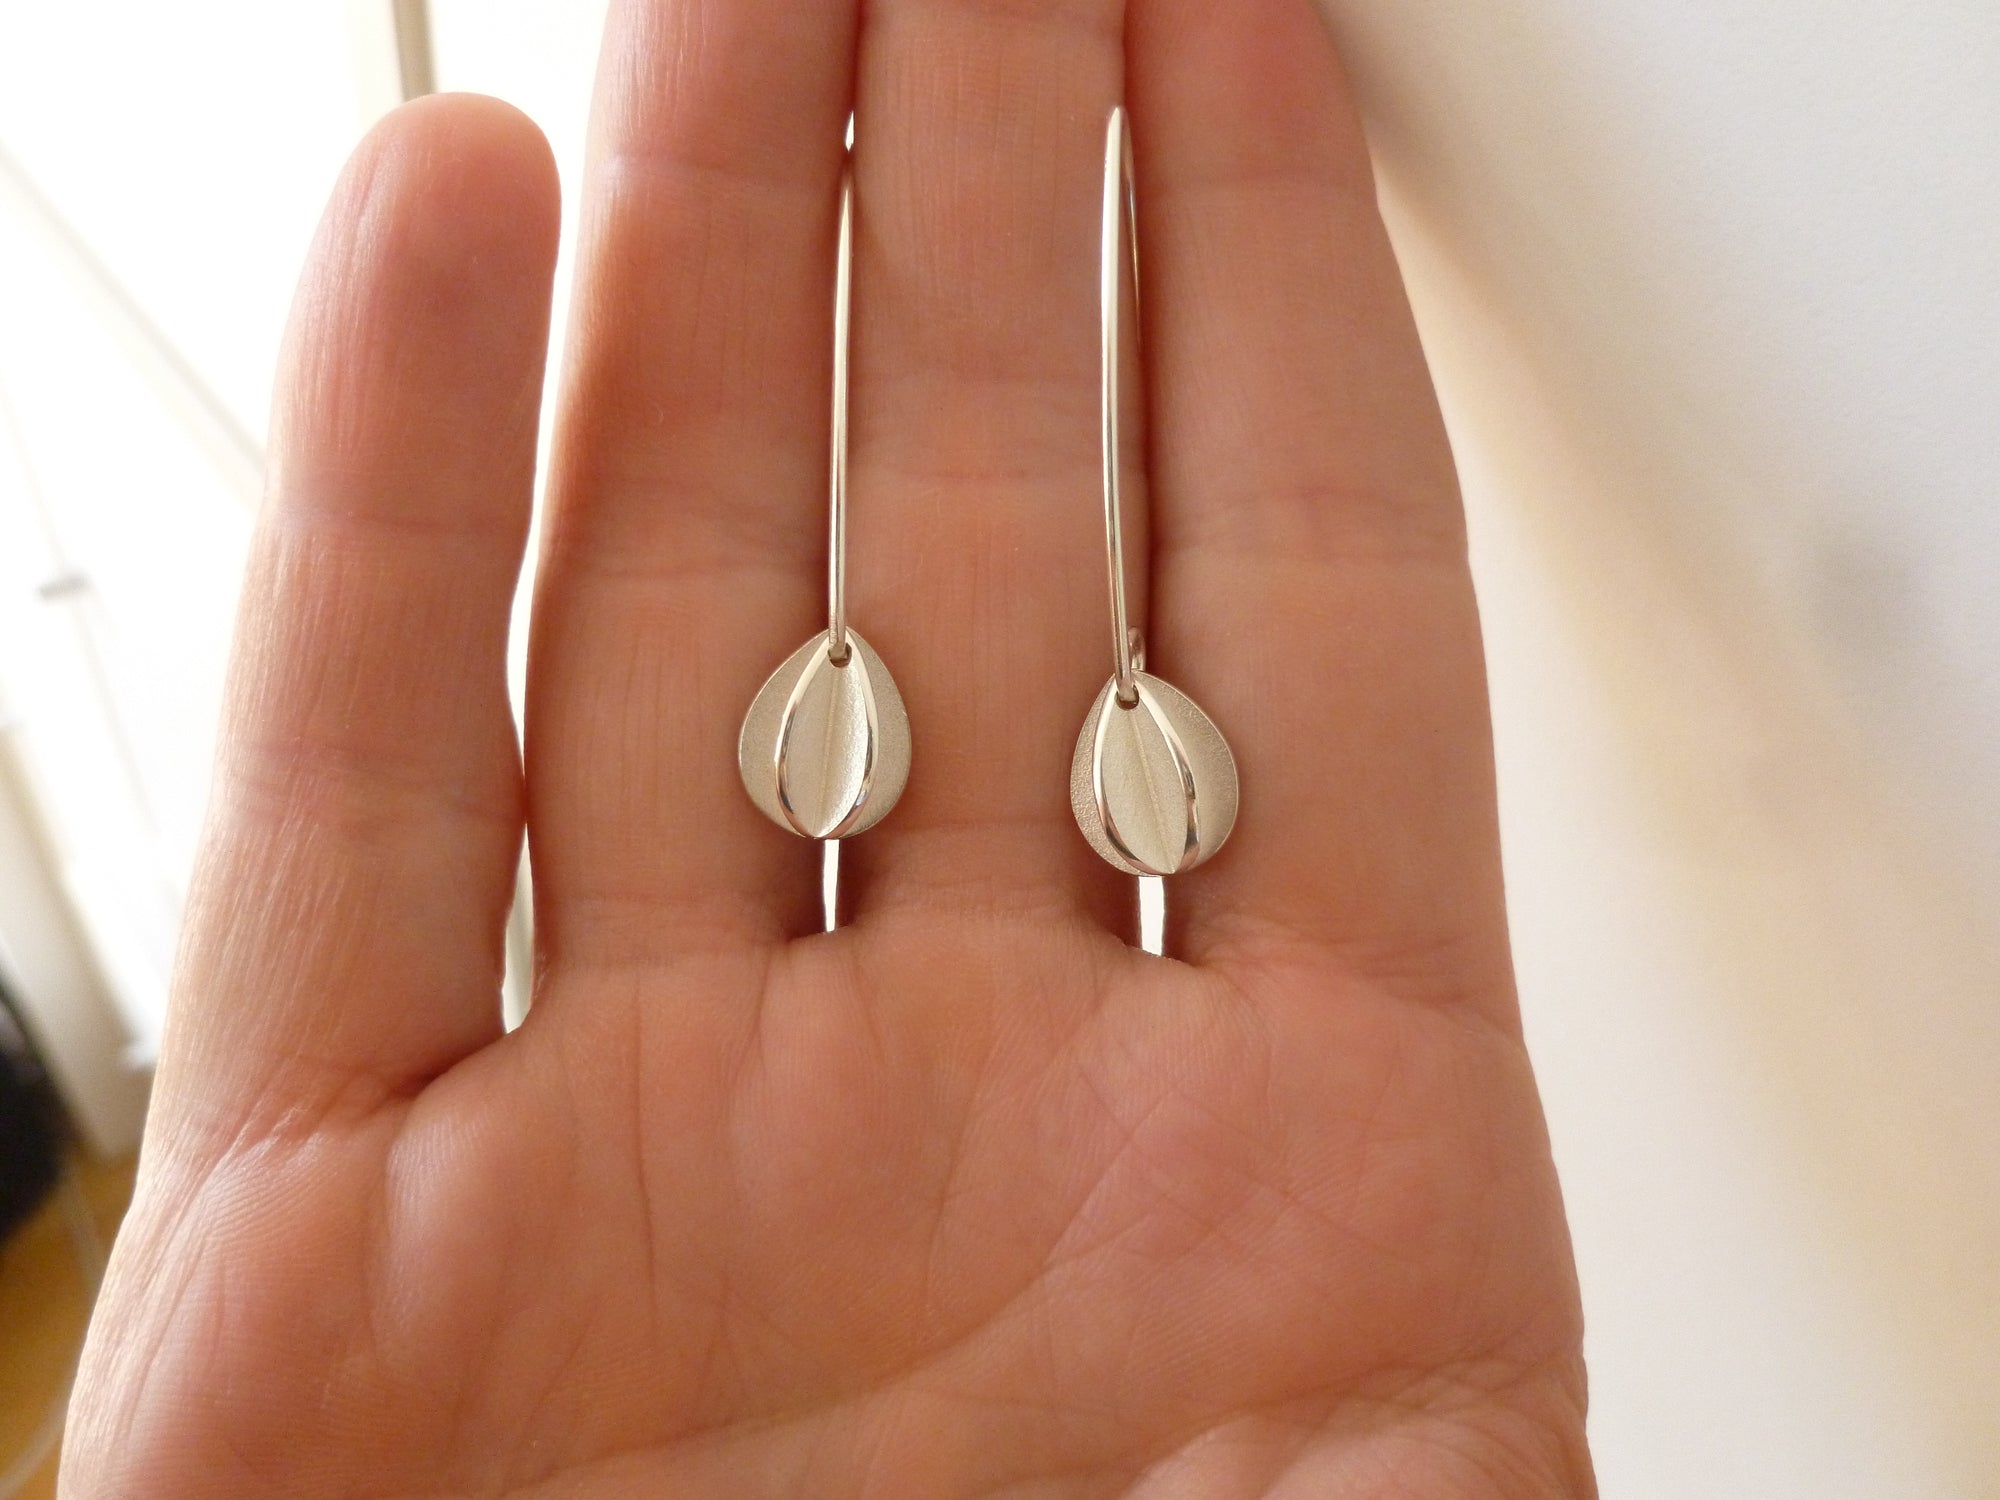 Silver hook earrings - simple and beautiful